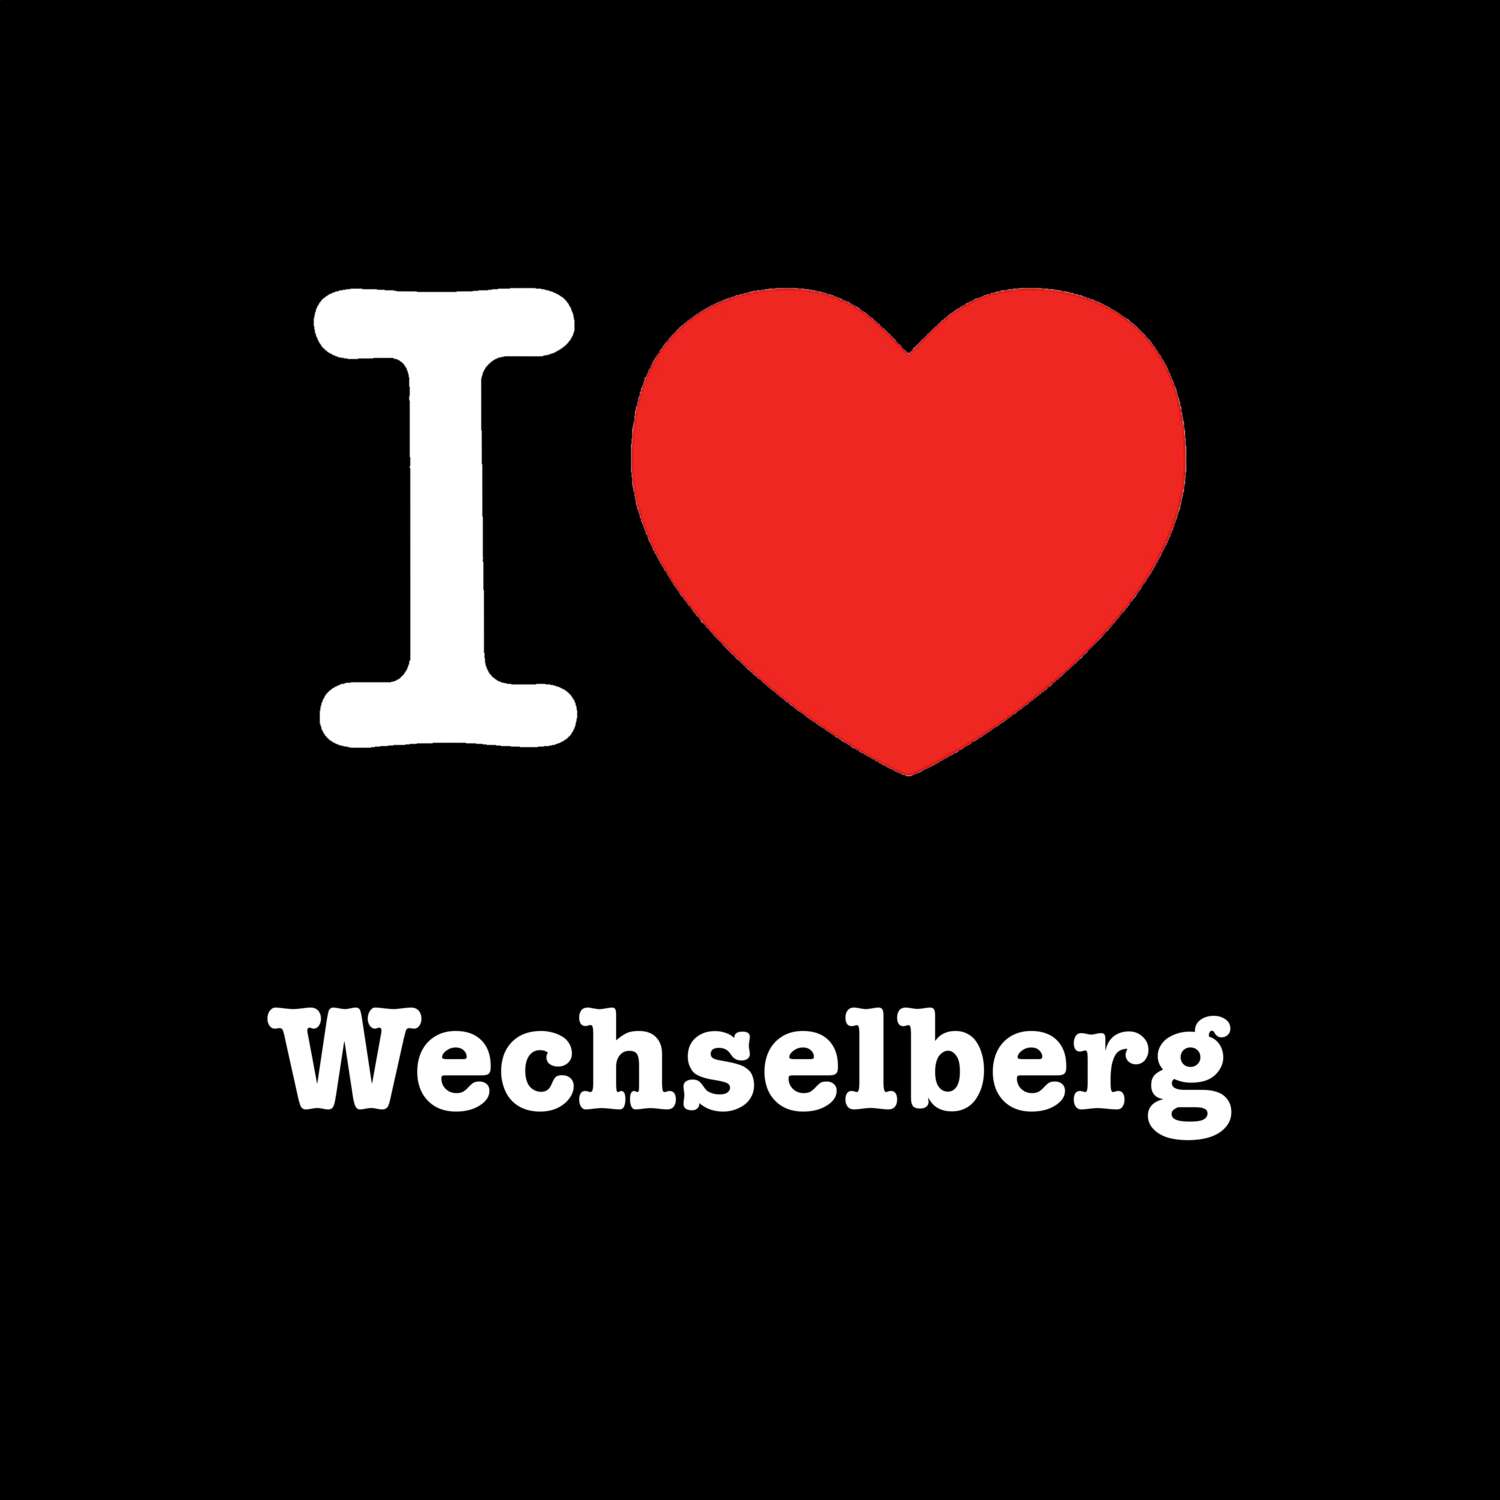 Wechselberg T-Shirt »I love«